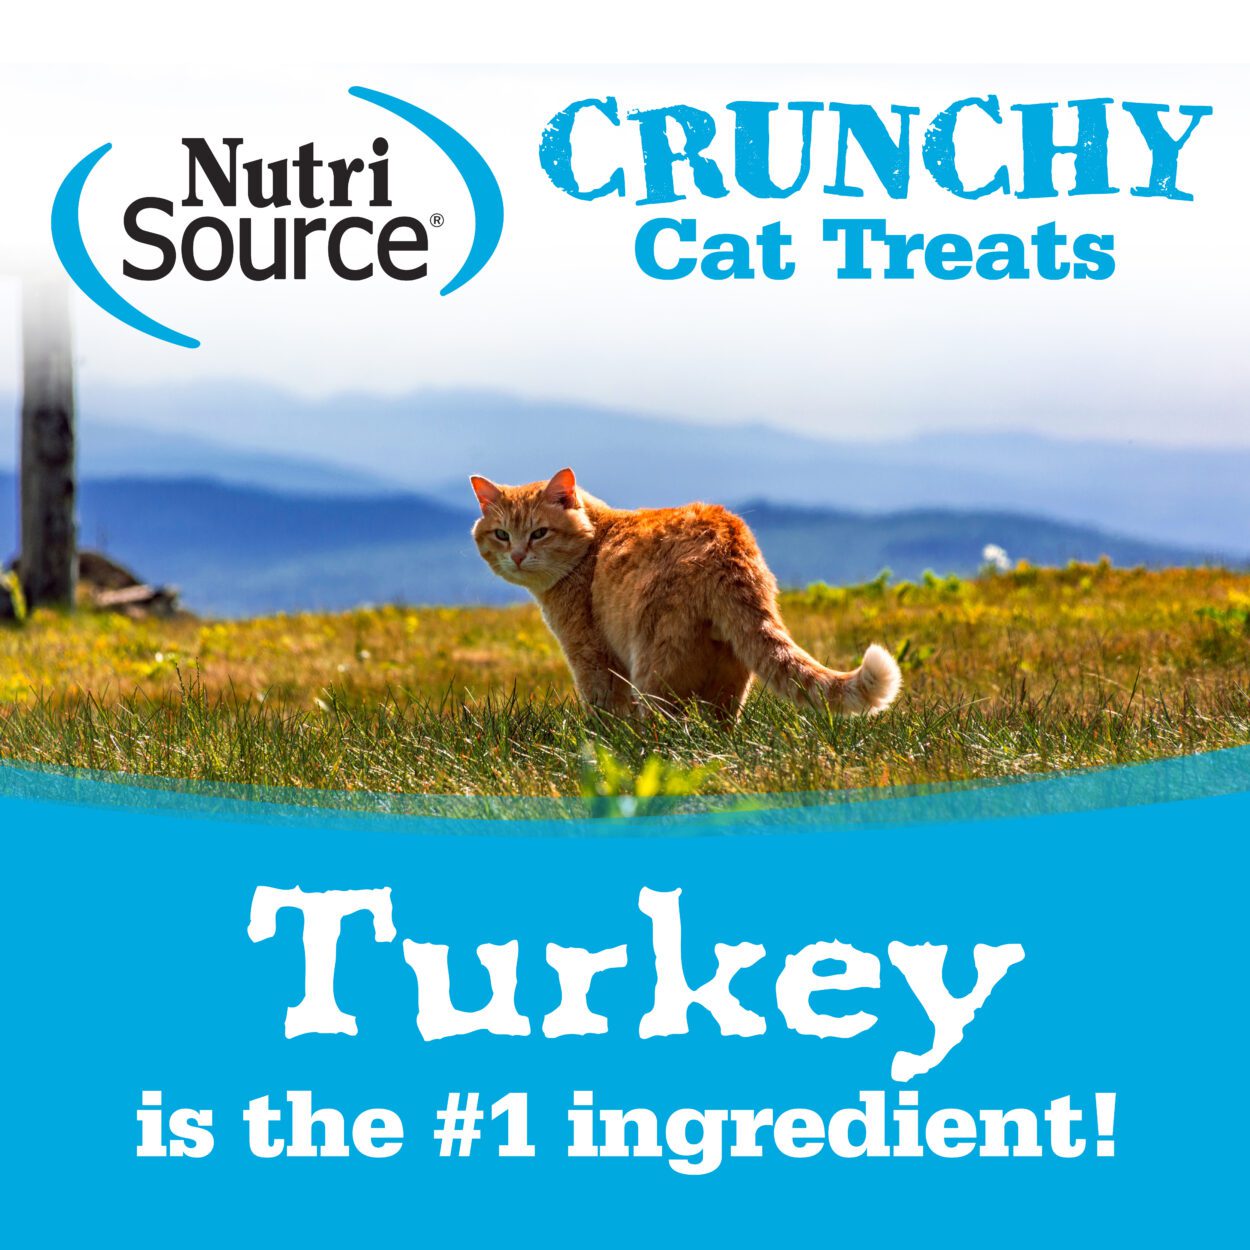 Turkey is the #1 ingredient!